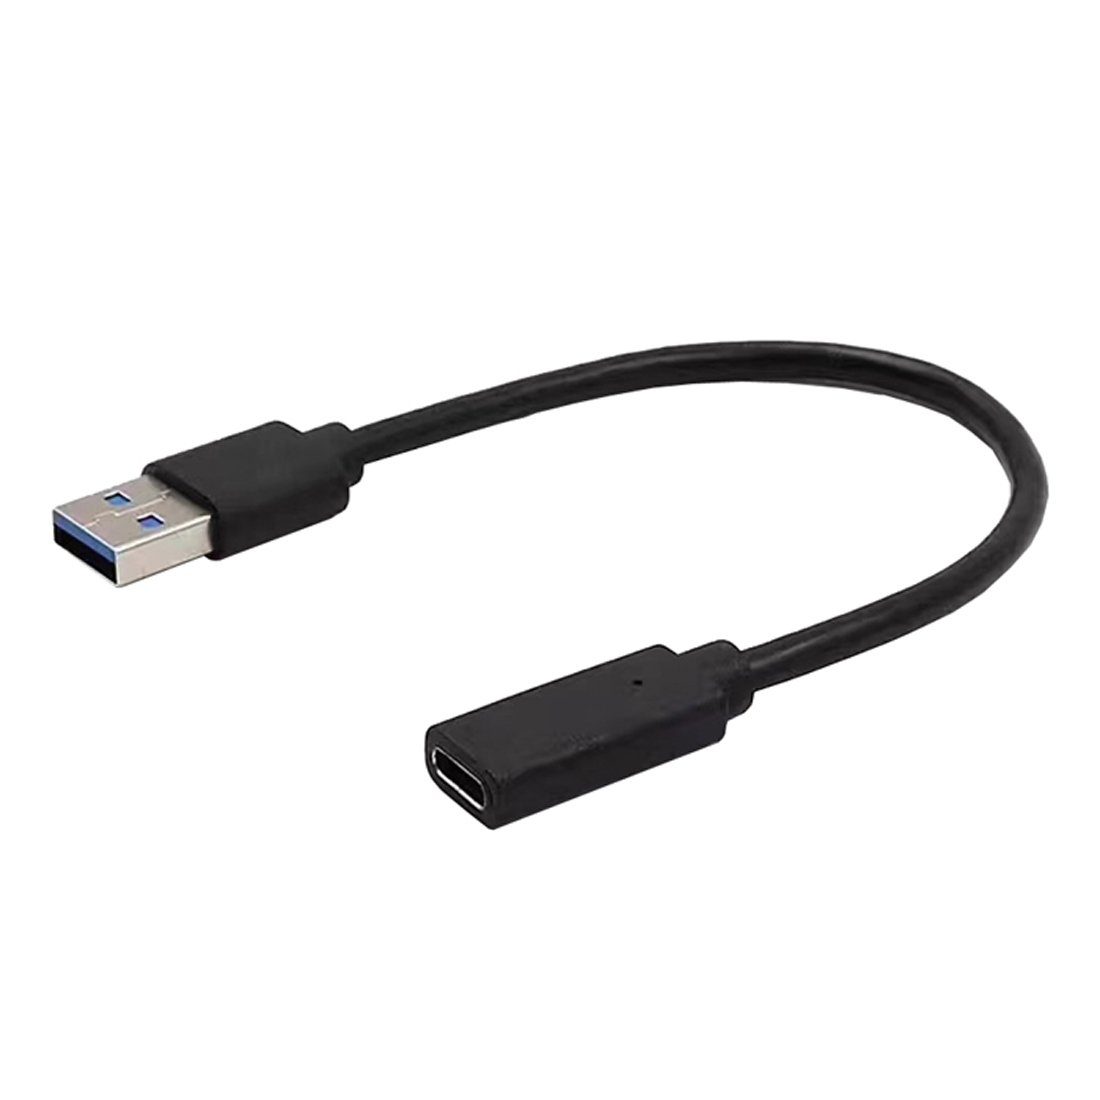 Bolwins Q20 20cm USB C 3.1 Buchse zu USB 3.0 Stecker Laden Daten